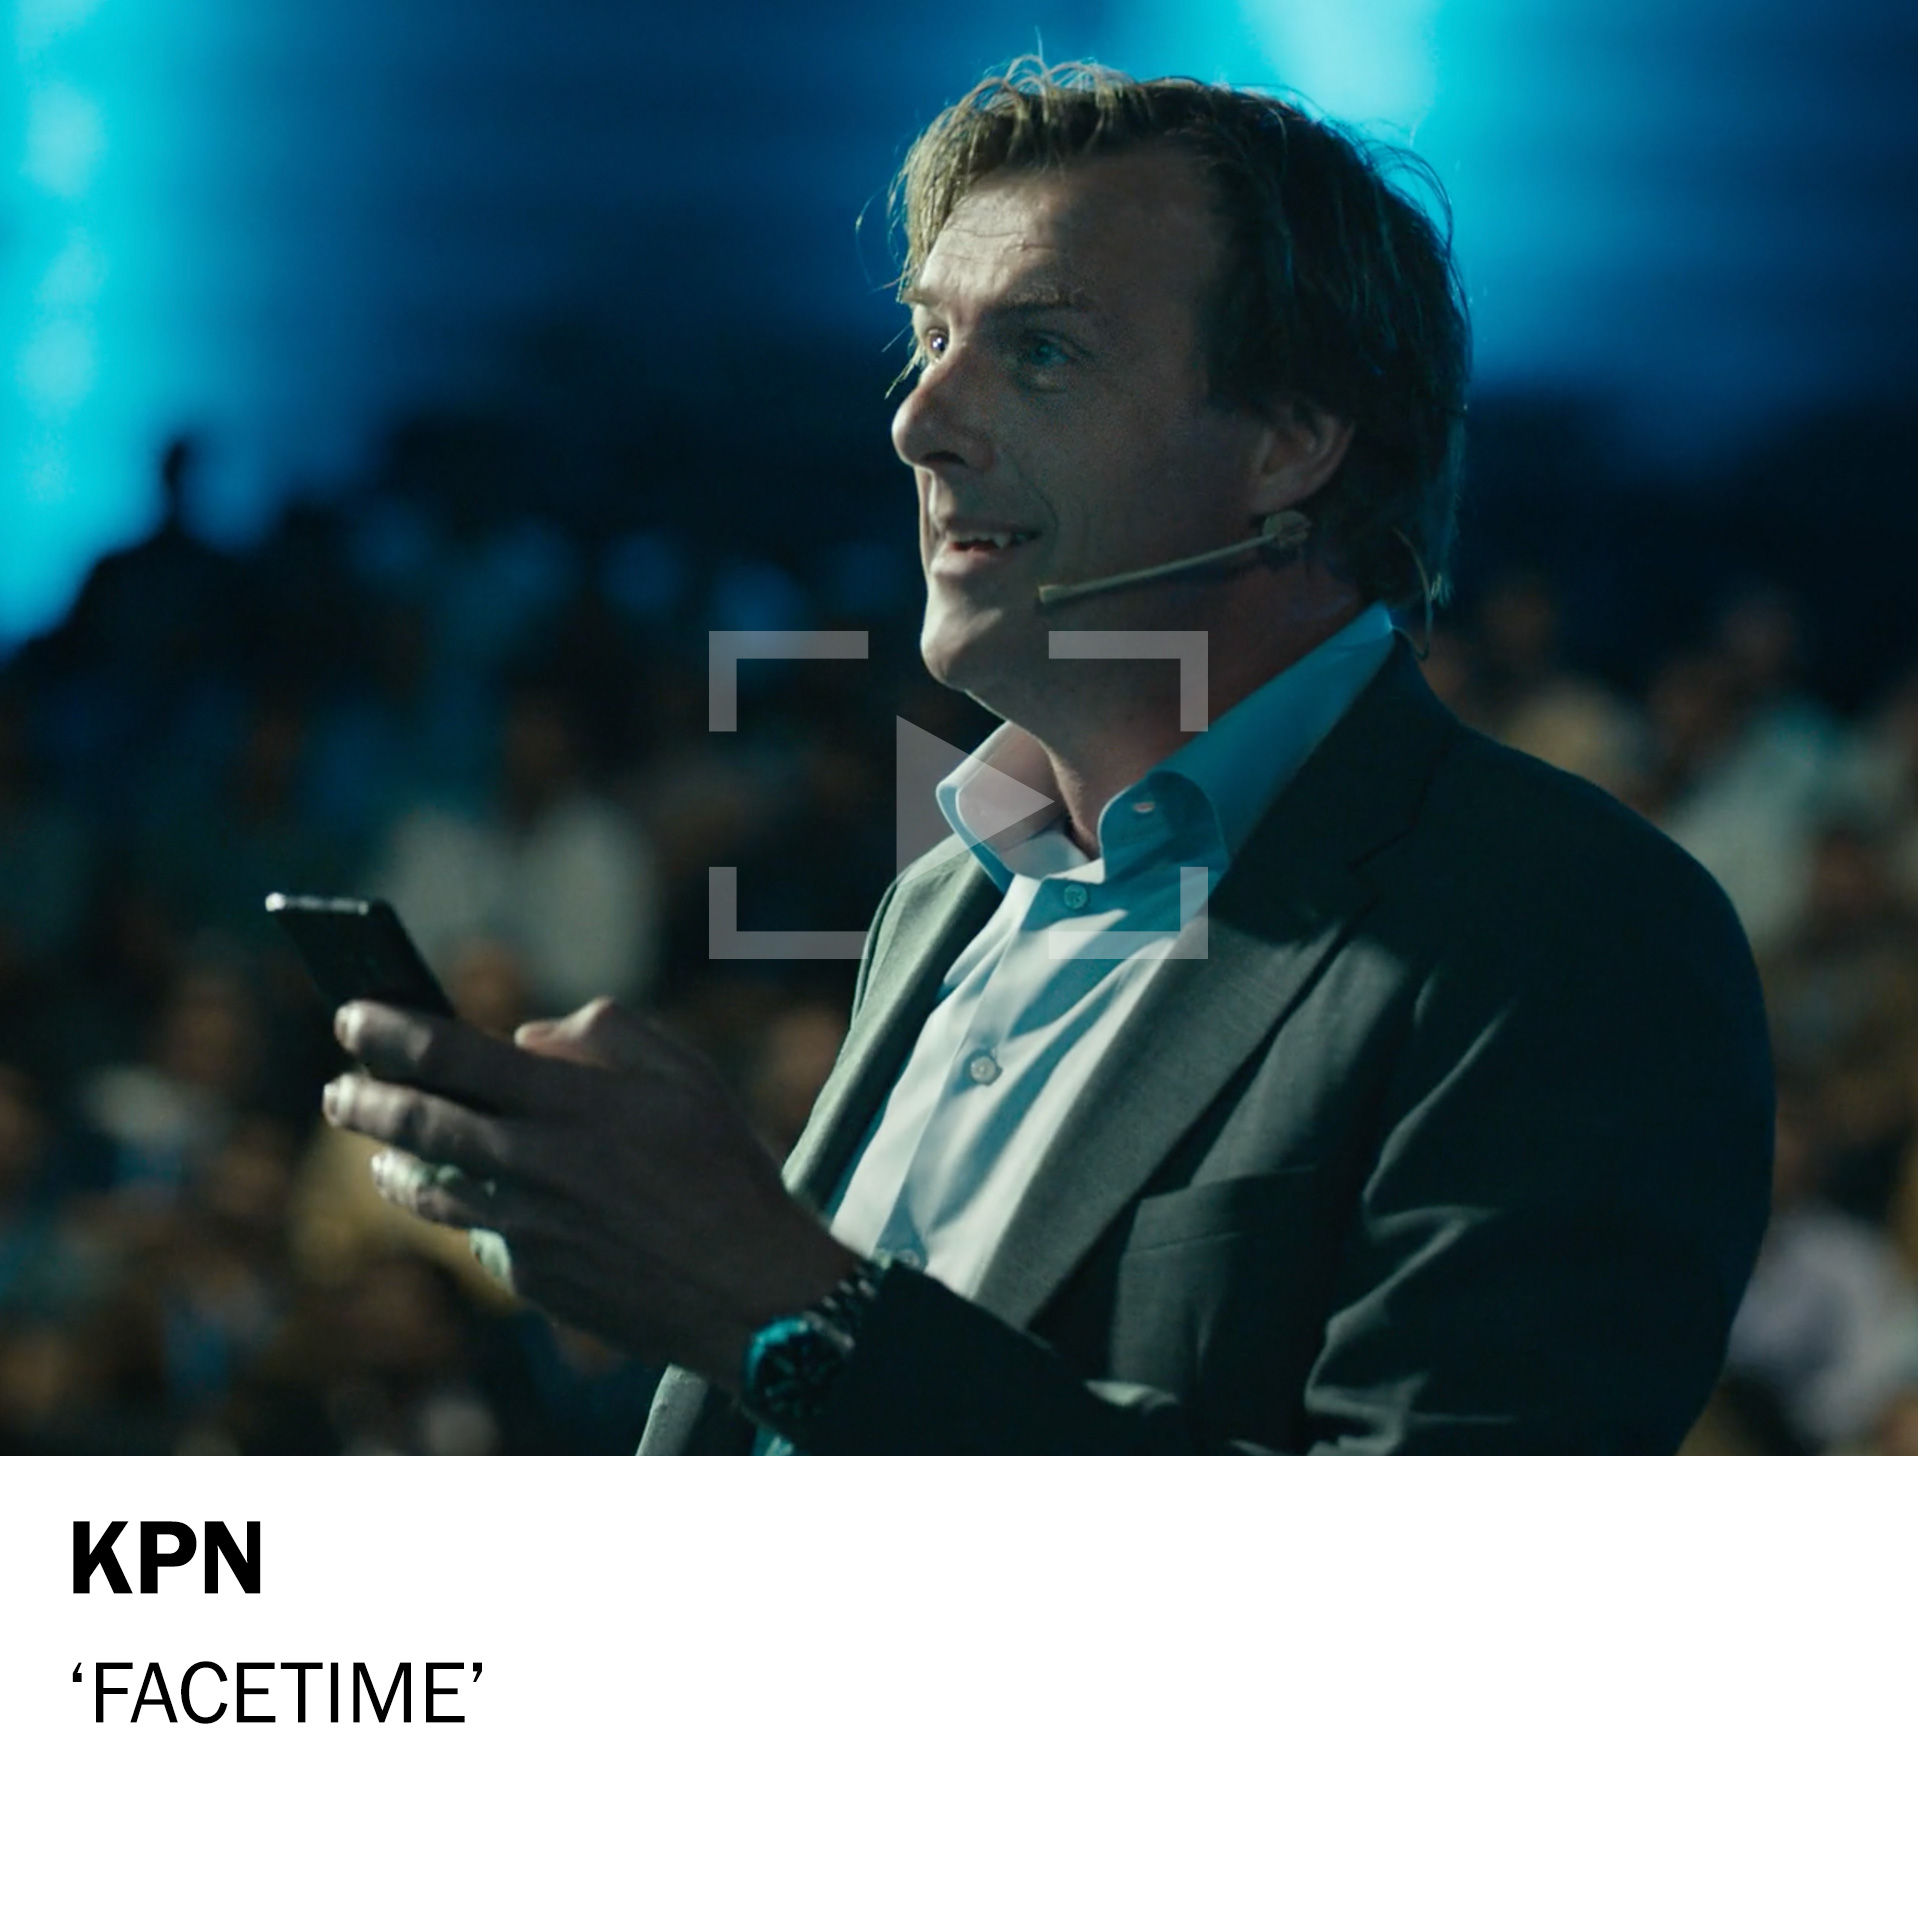 KPN – Facetime